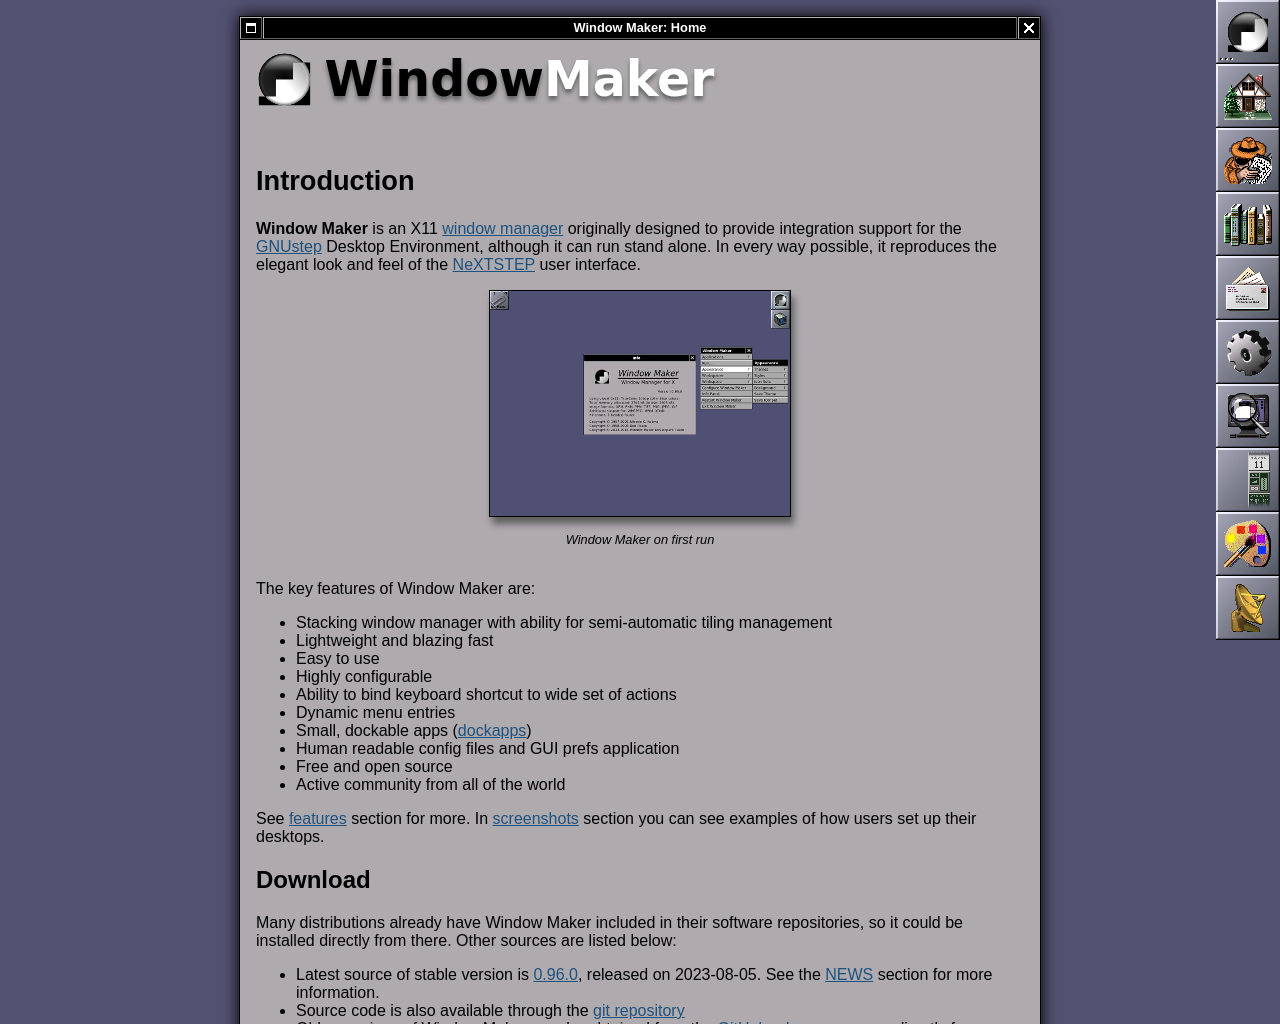 windowmaker.org